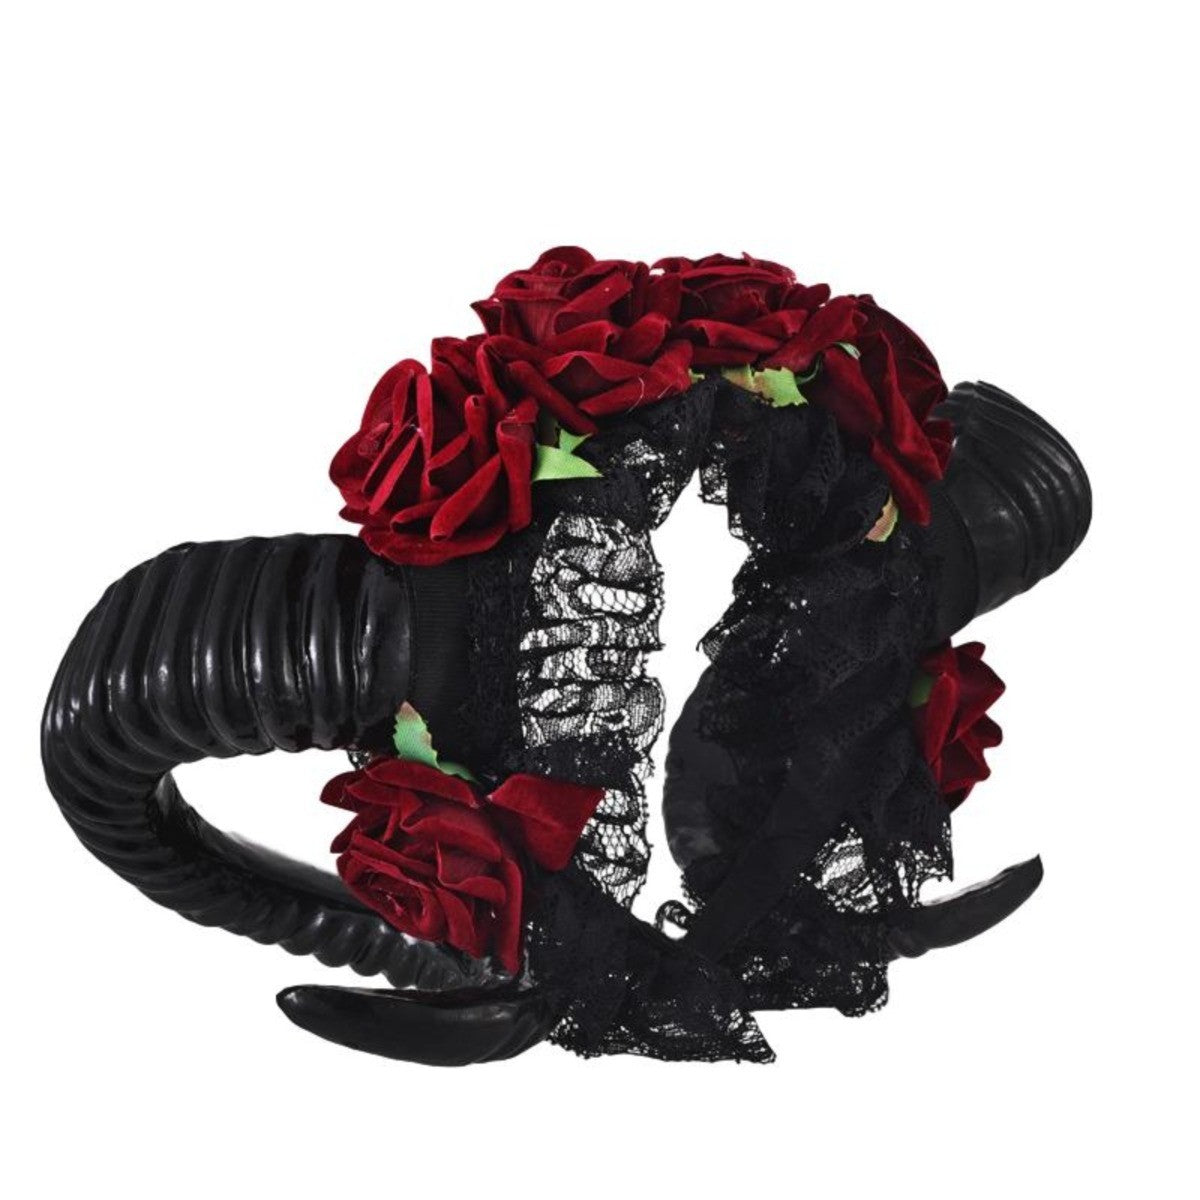 Ro Rox Red Roses Horns Gothic Headband